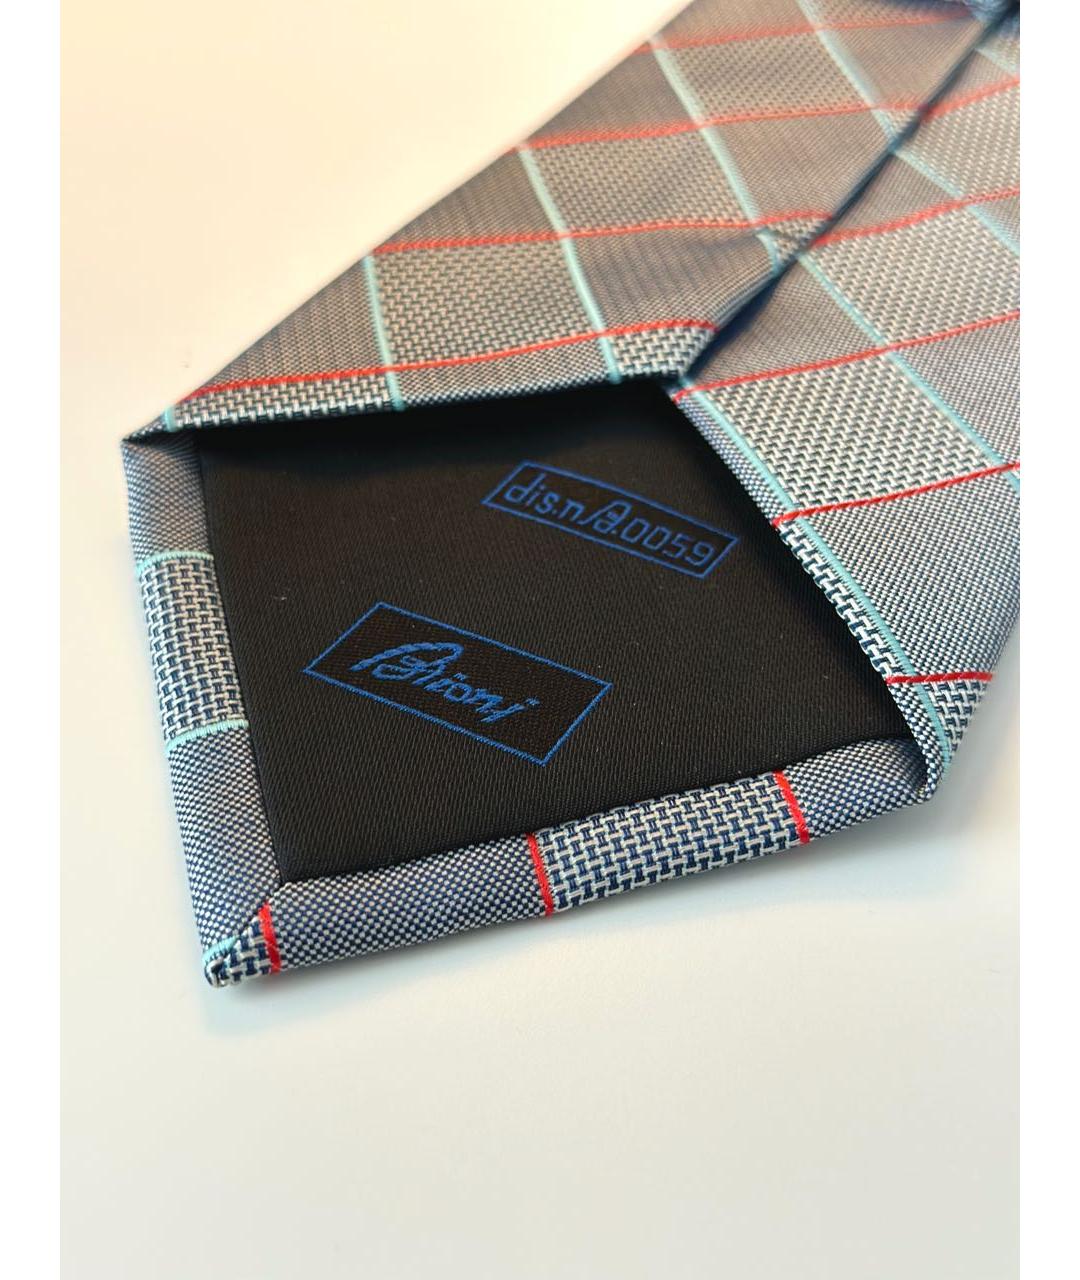 BRIONI Шелковый галстук, фото 2